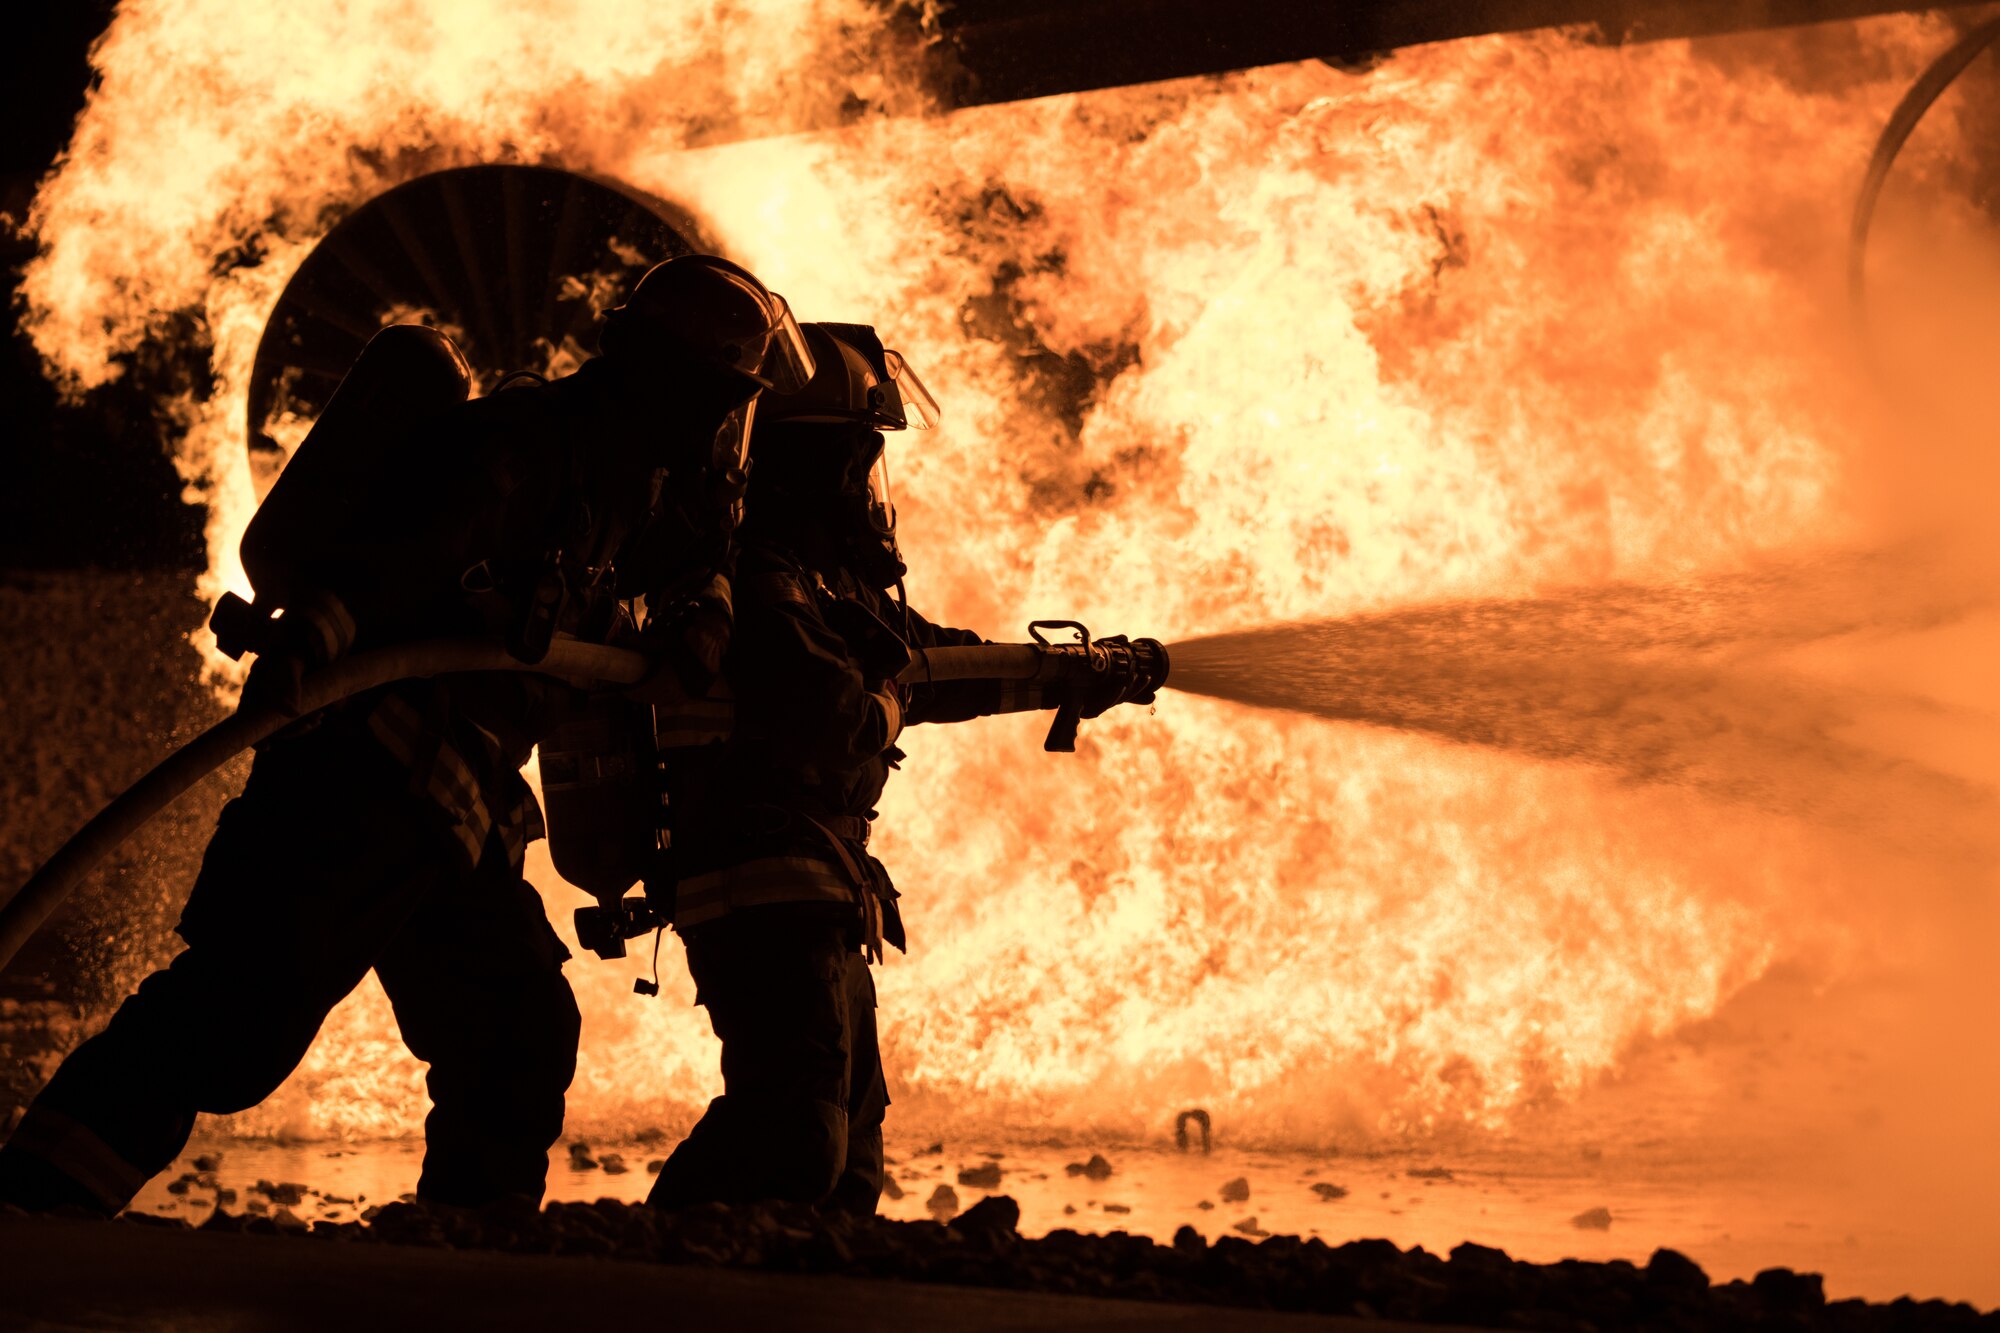 Airmen extinguish live fire during exercise